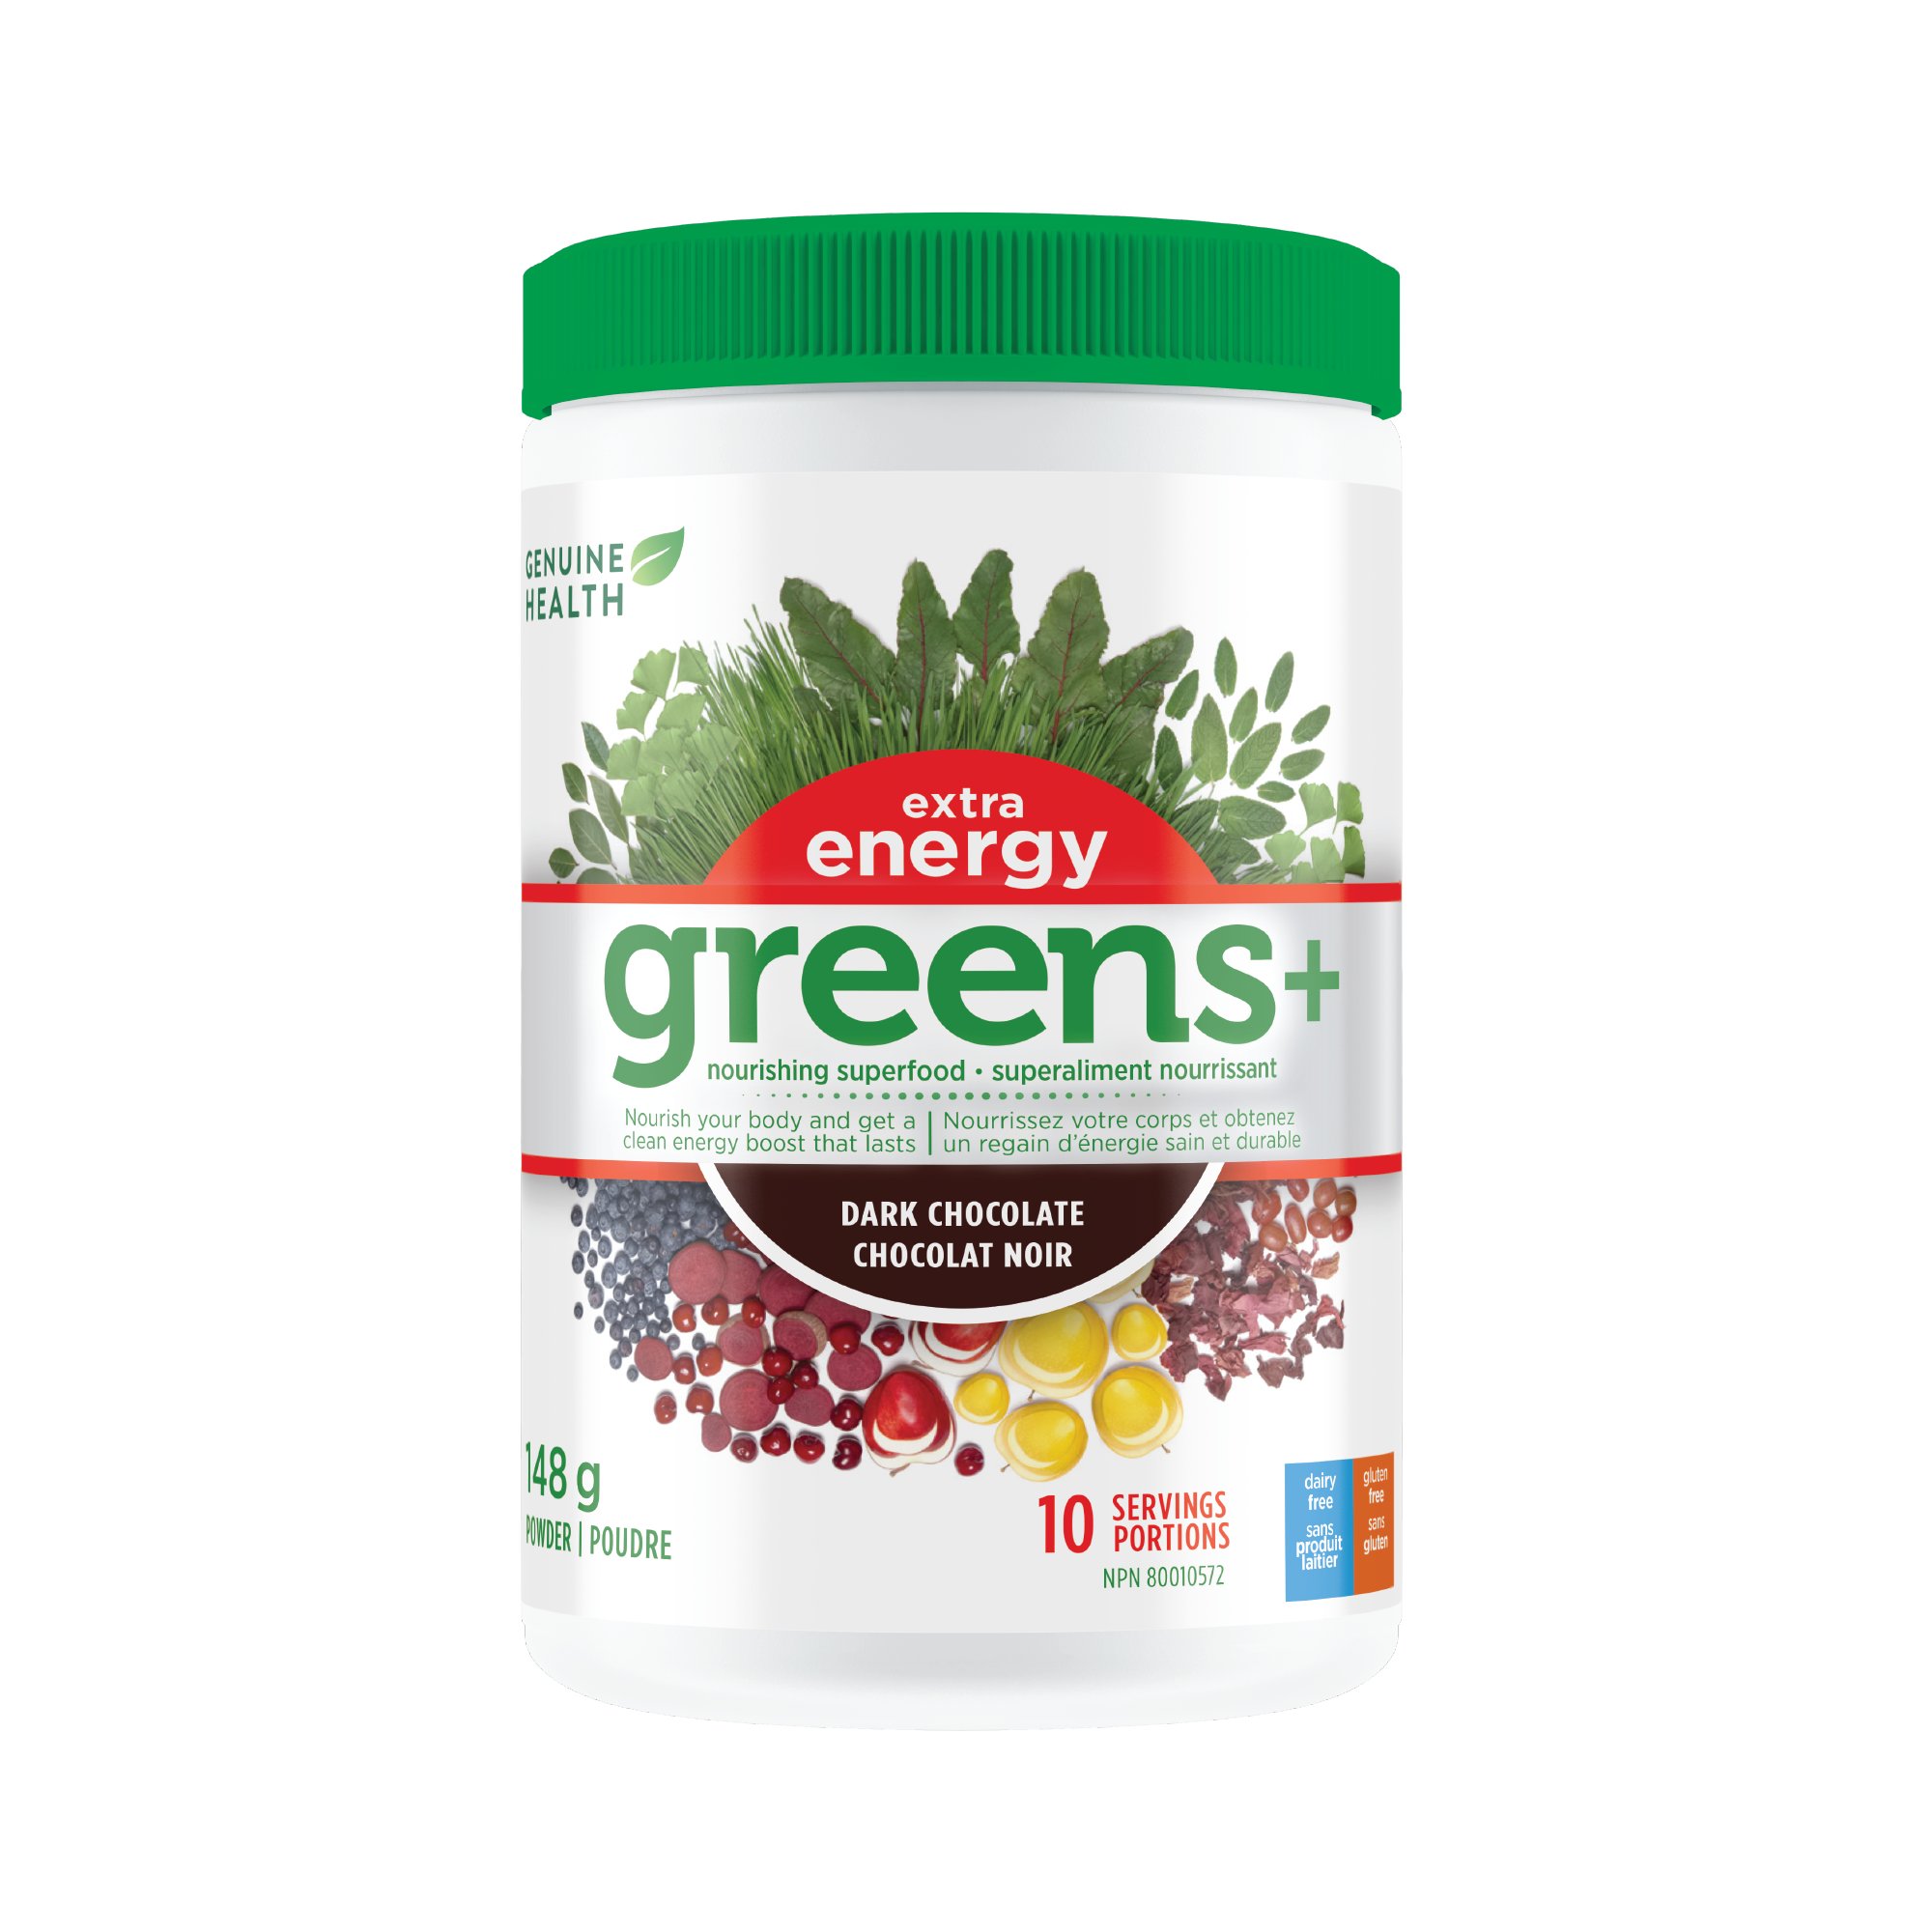 Genuine Health Greens+ Extra Energy Dark Chocolate 148g